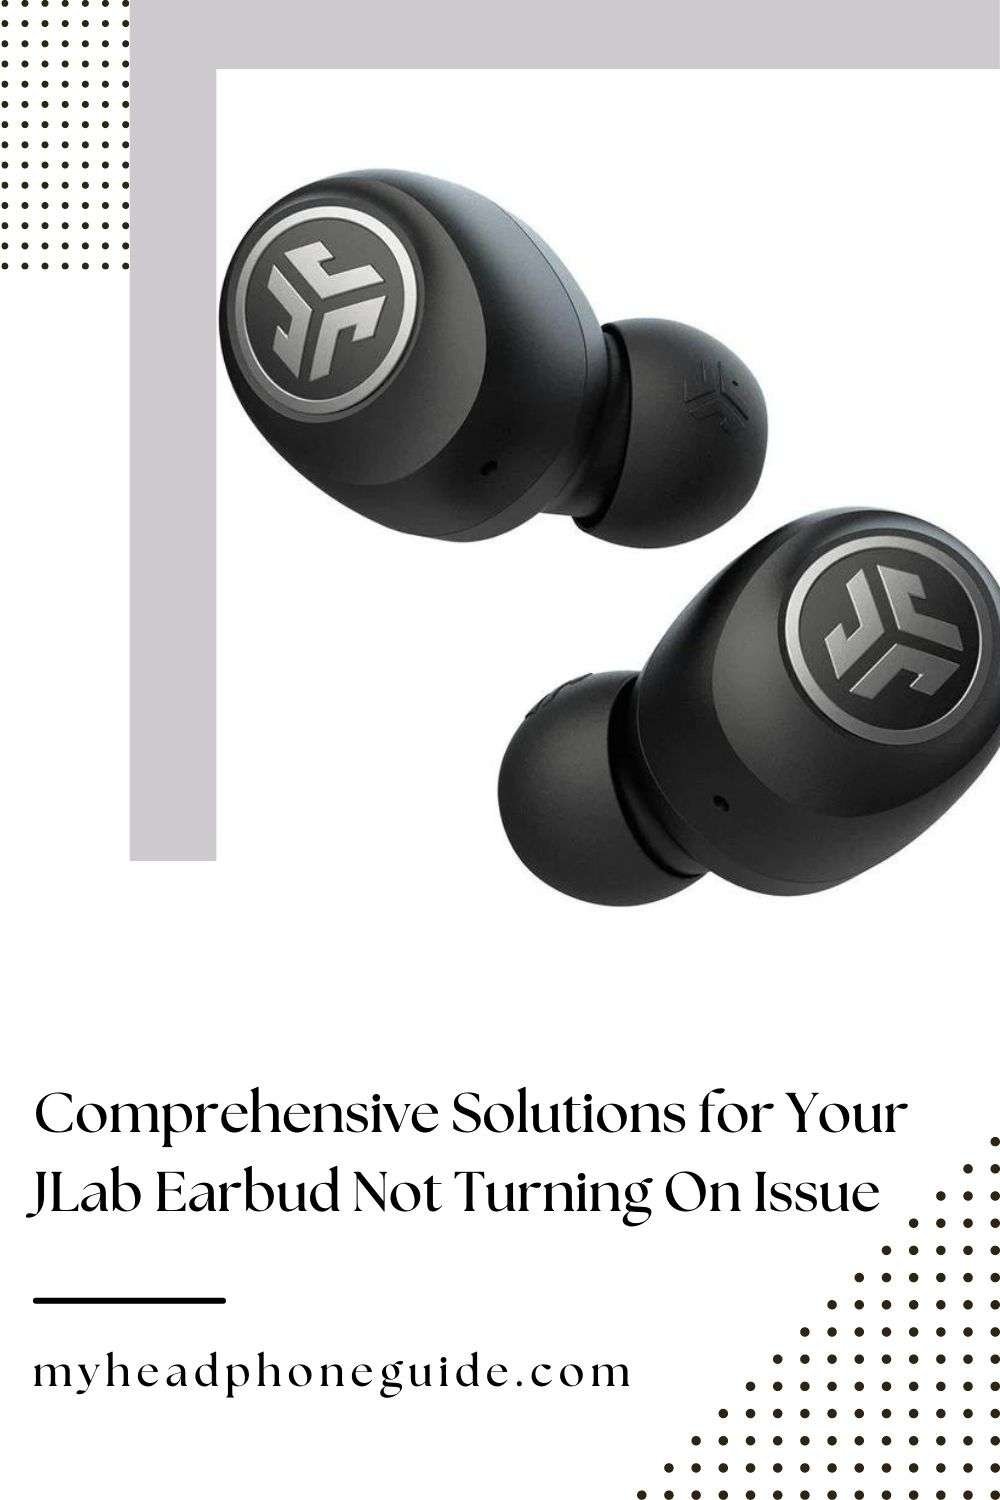 JLab Earbud Not Turning On